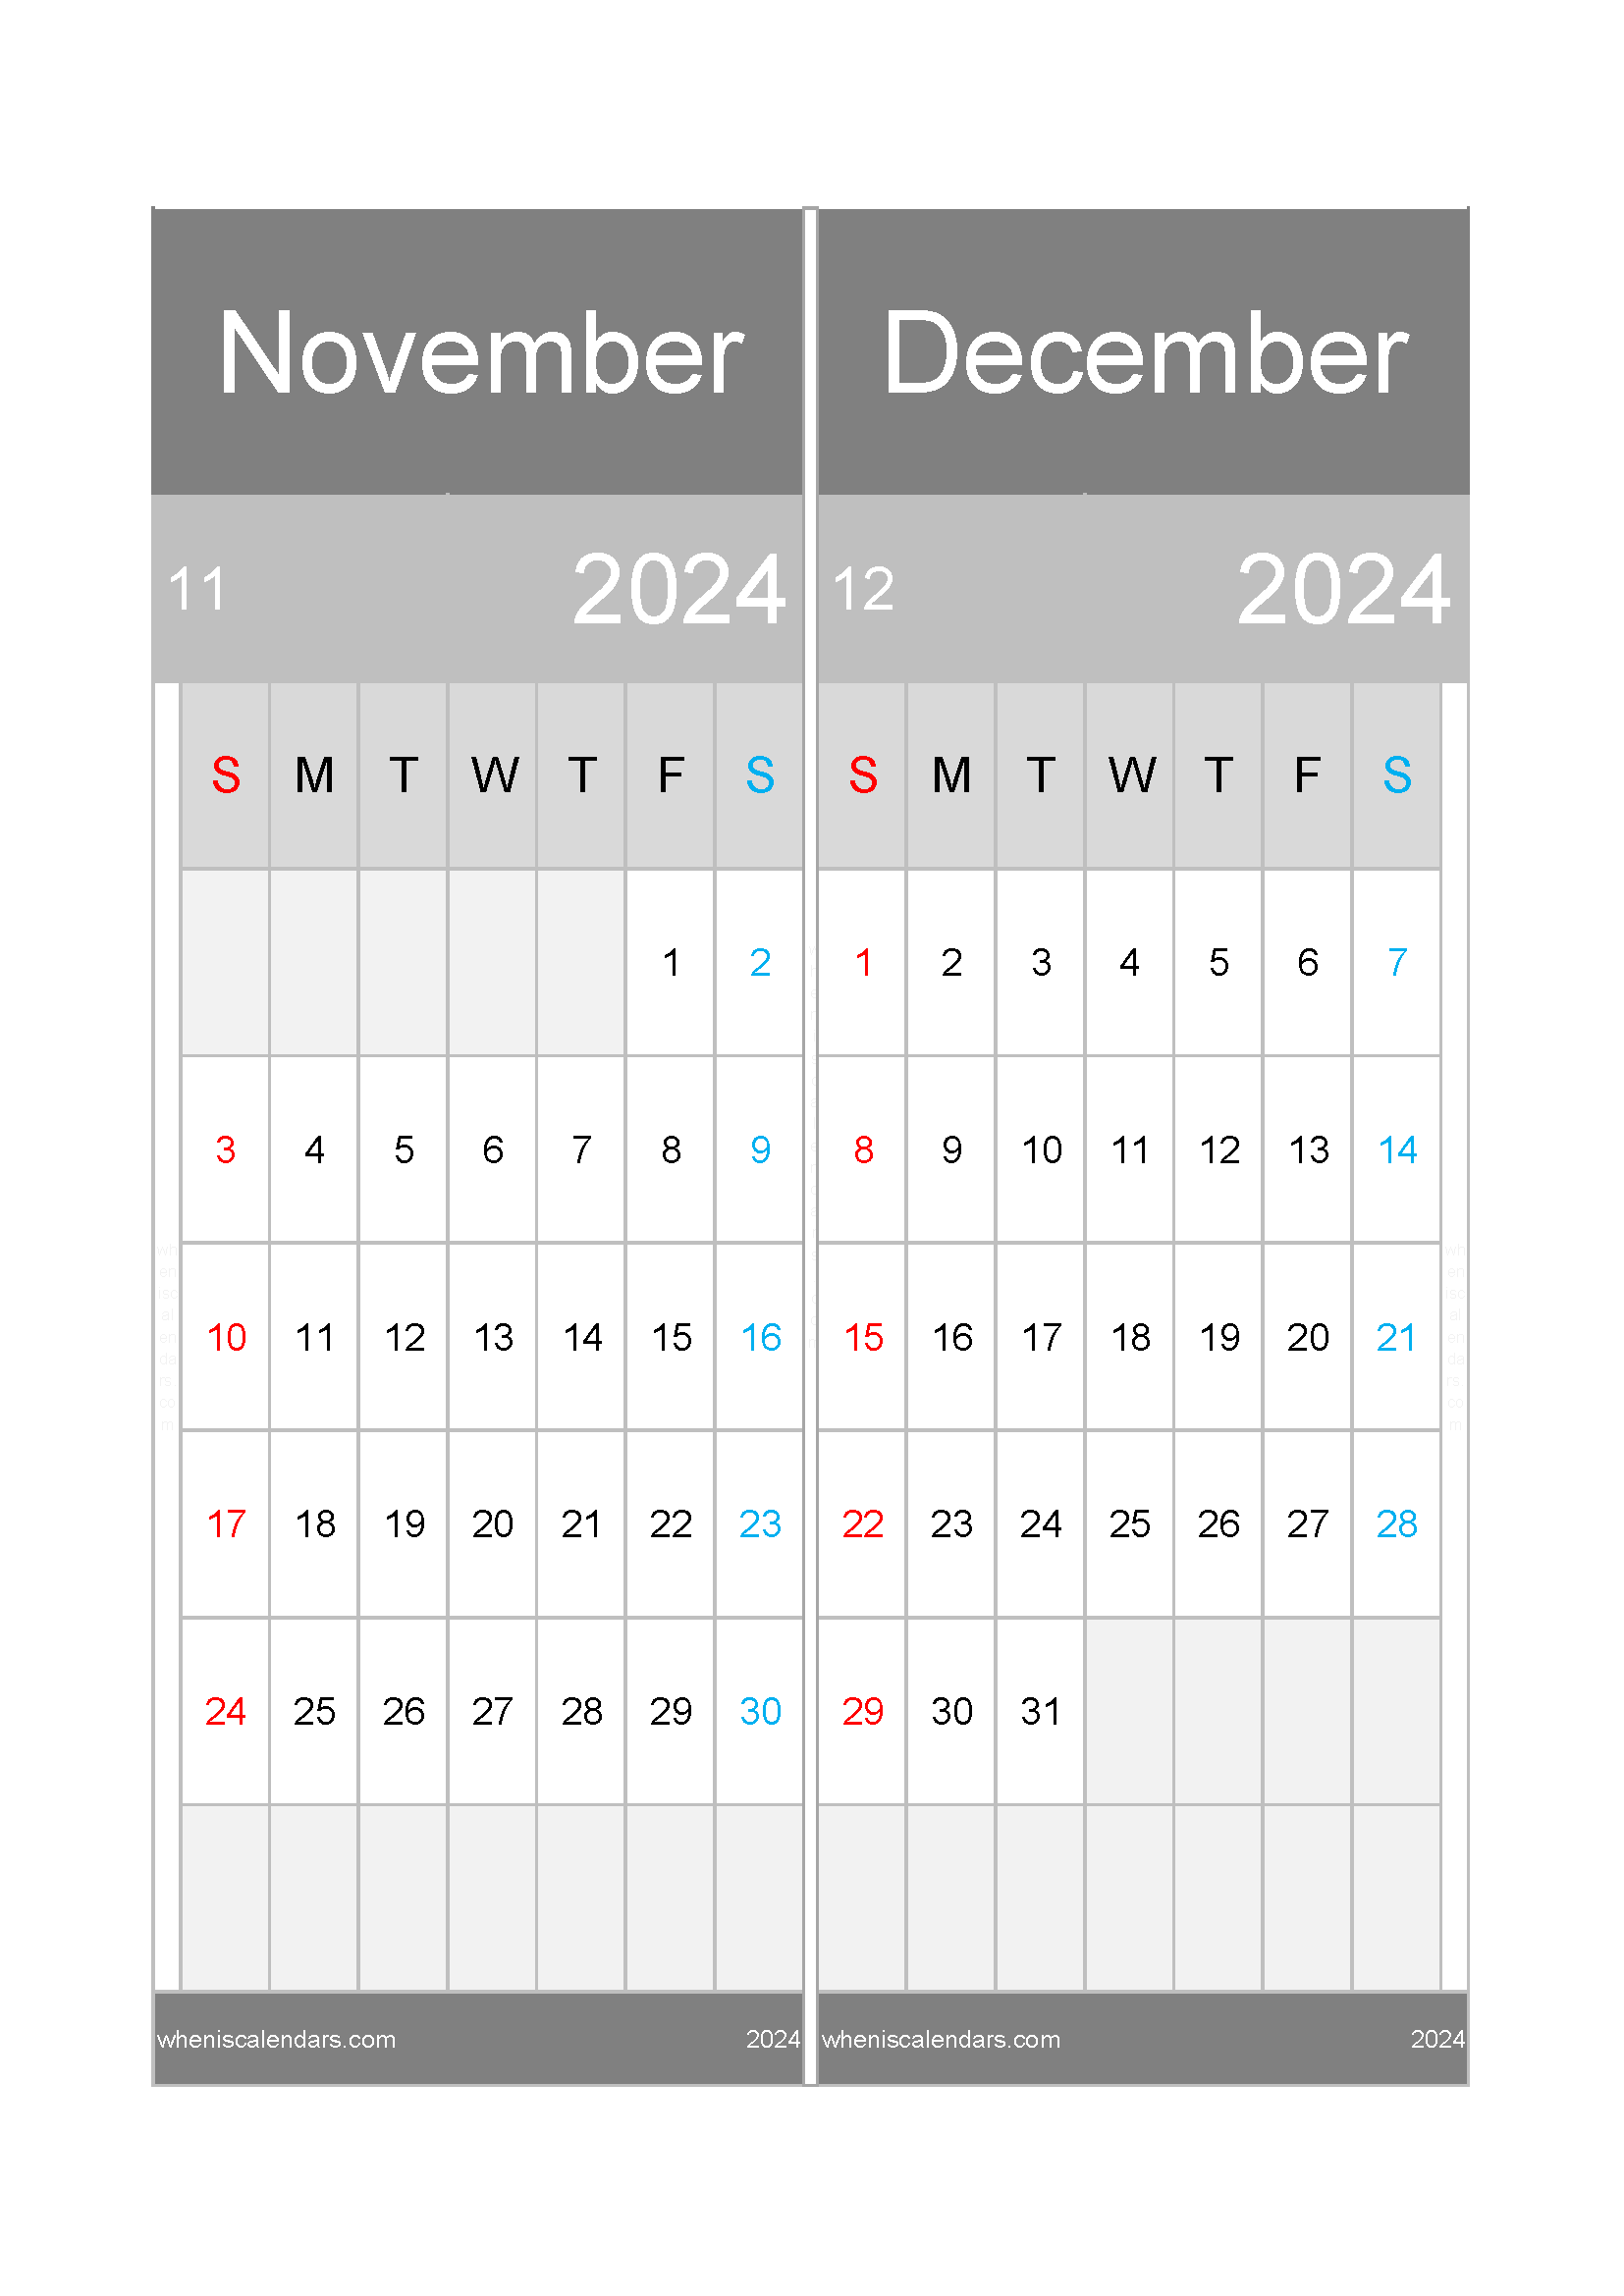 Download Calendar for November and December 2024 A4 ND419